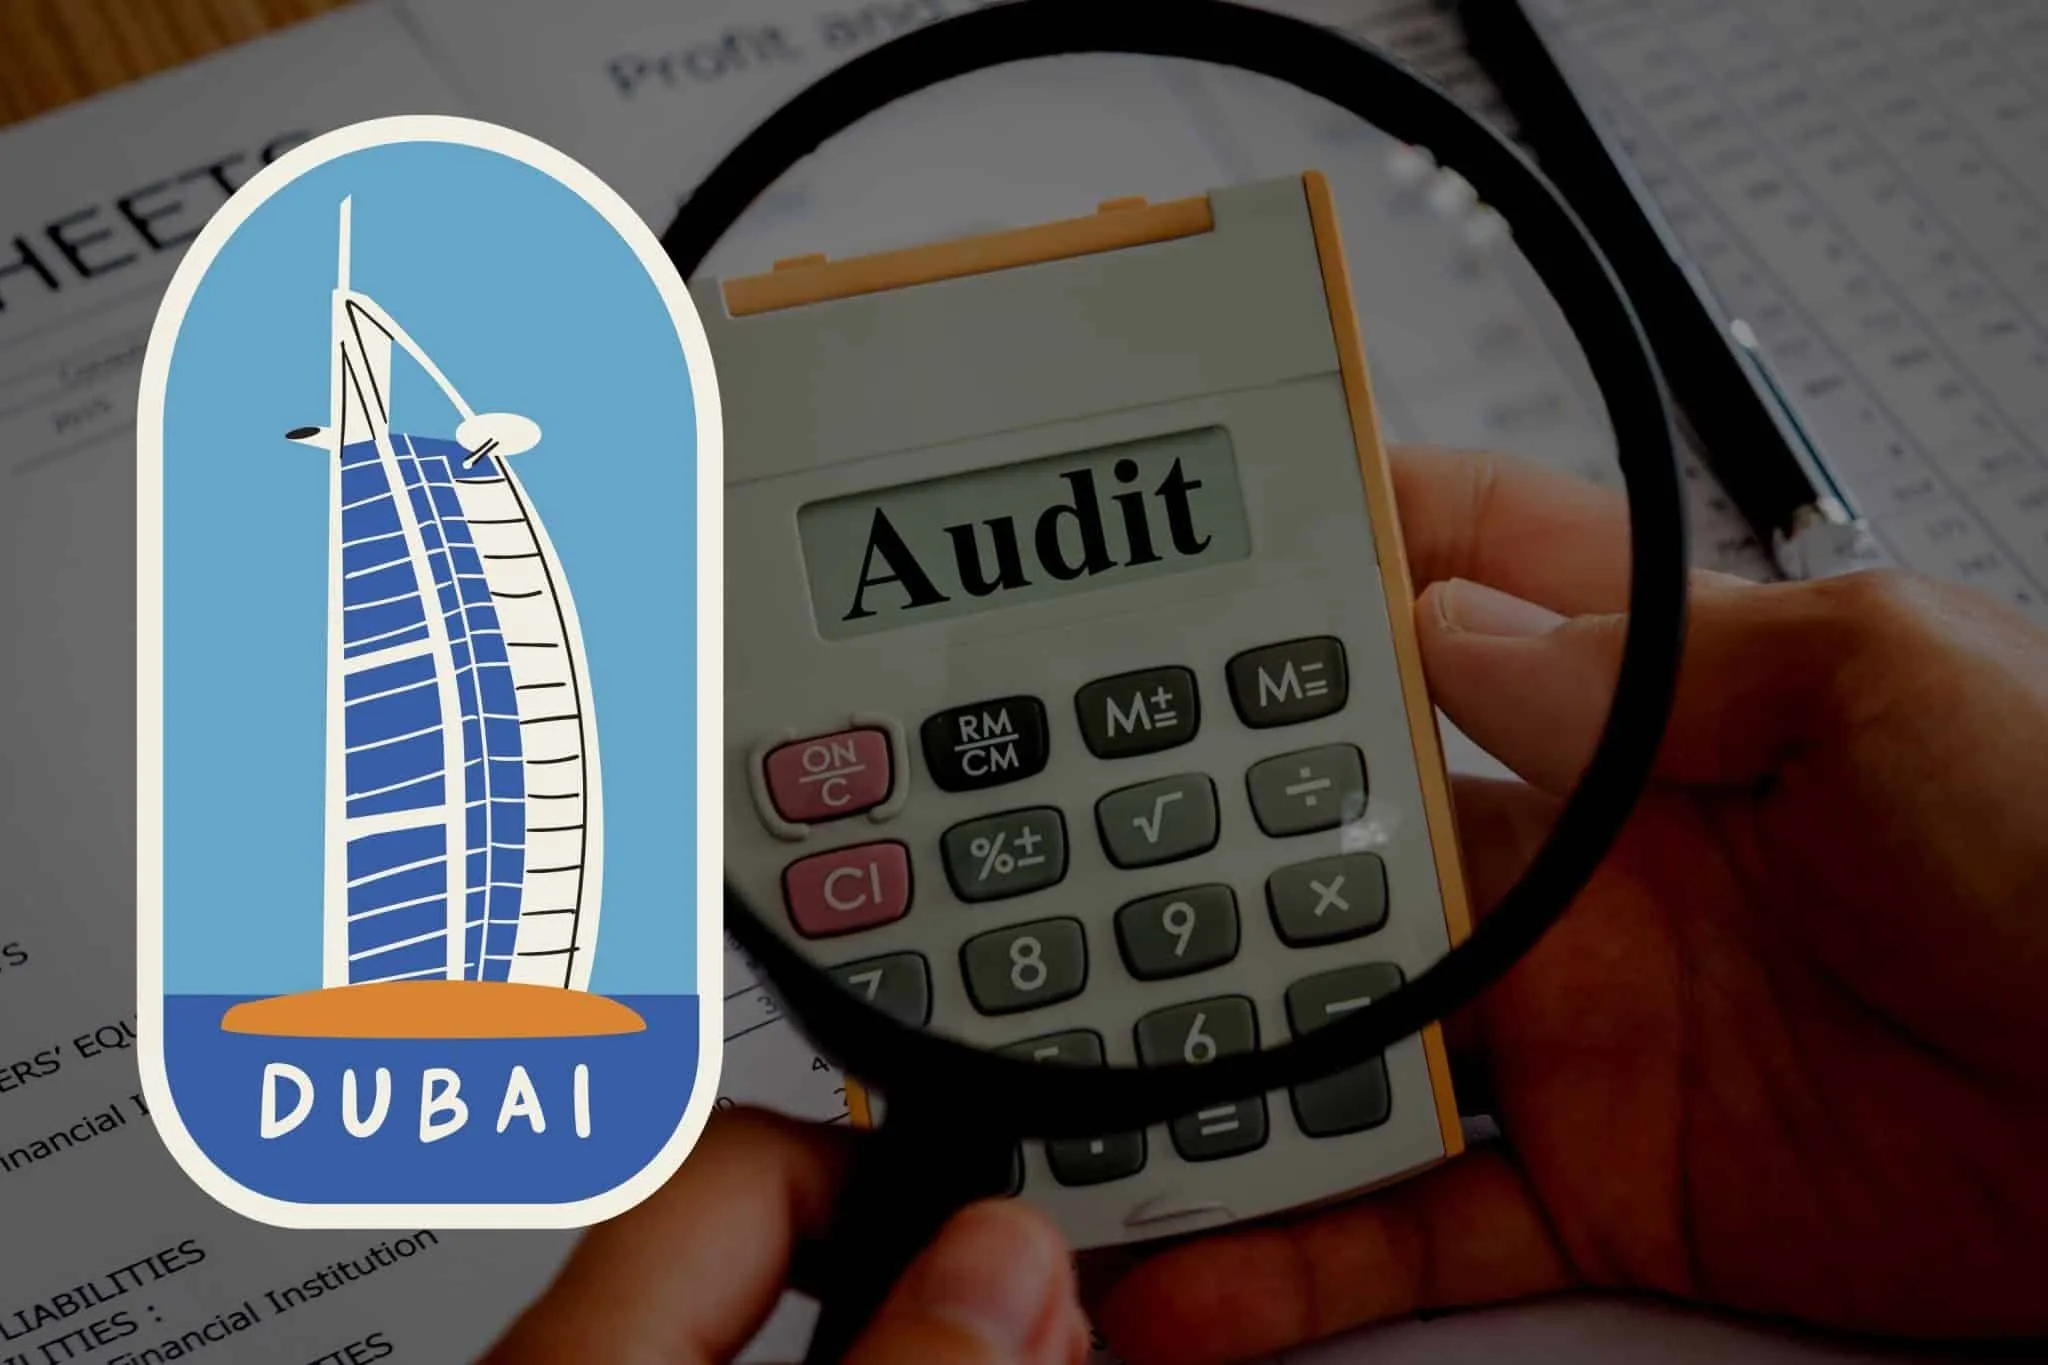 an internal audit firm in dubai guide for conducting virtual internal audits